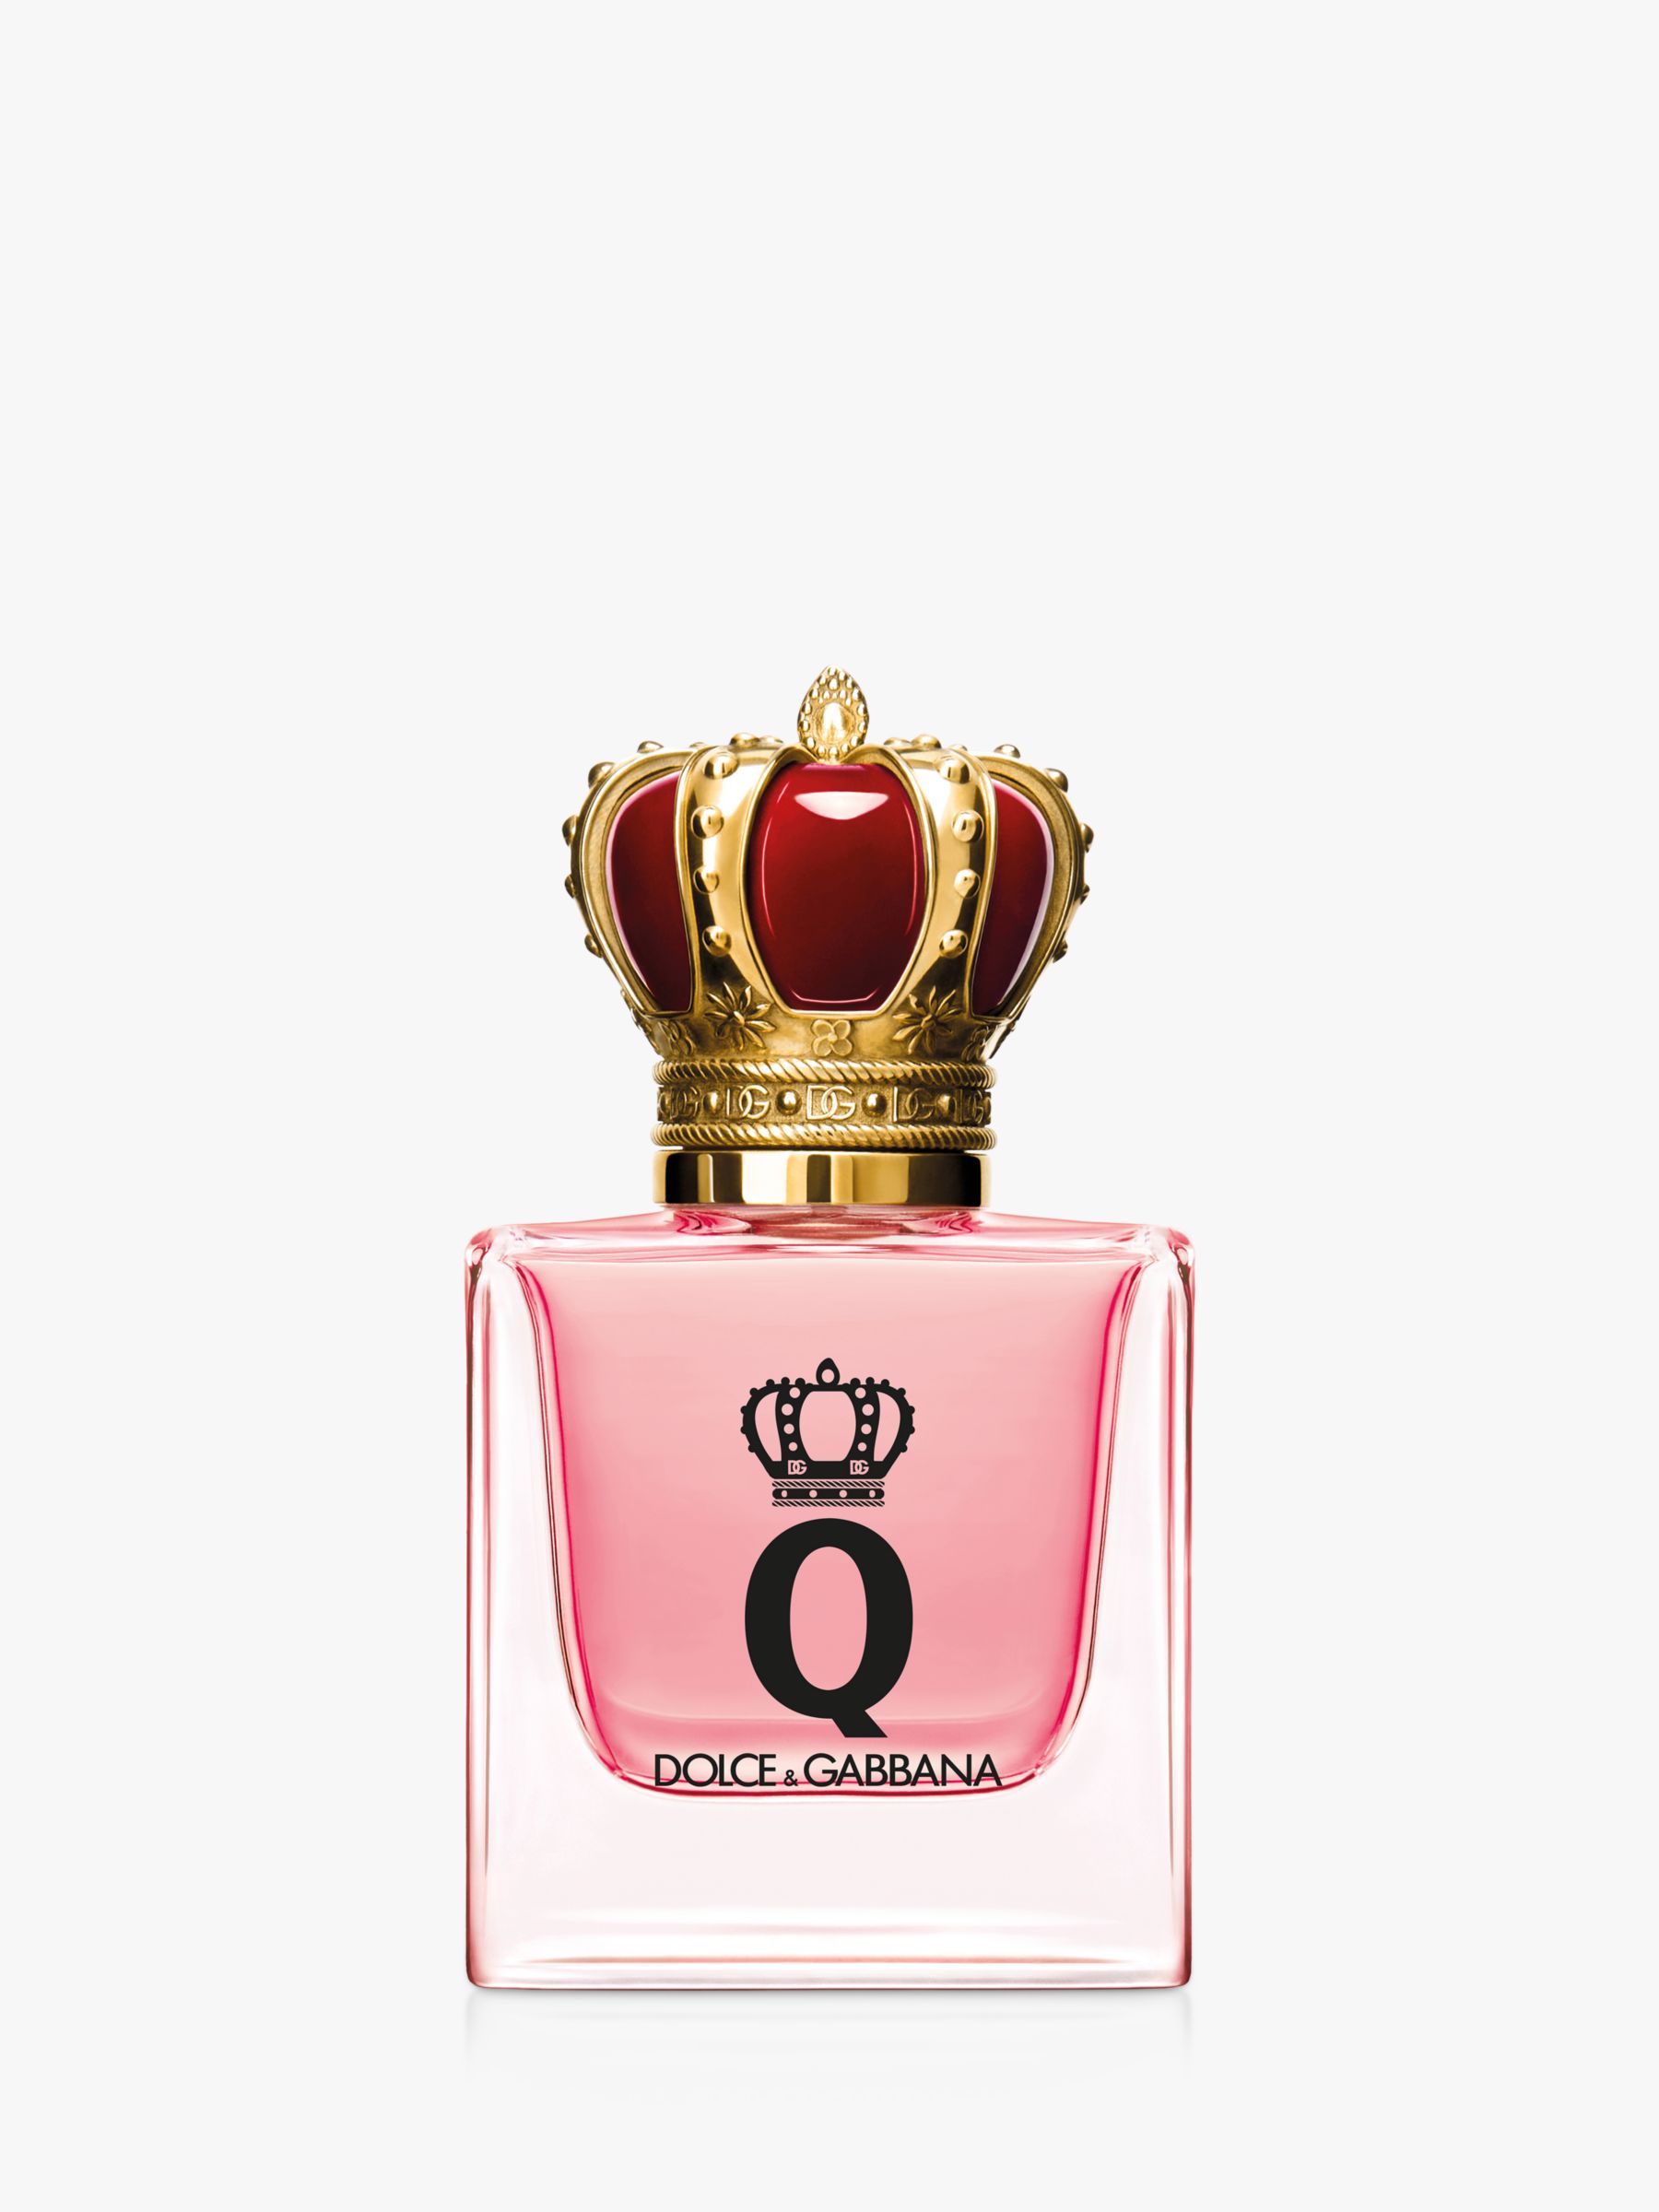 Dolce & Gabbana Q by Dolce & Gabbana Eau de Parfum, 30ml 1